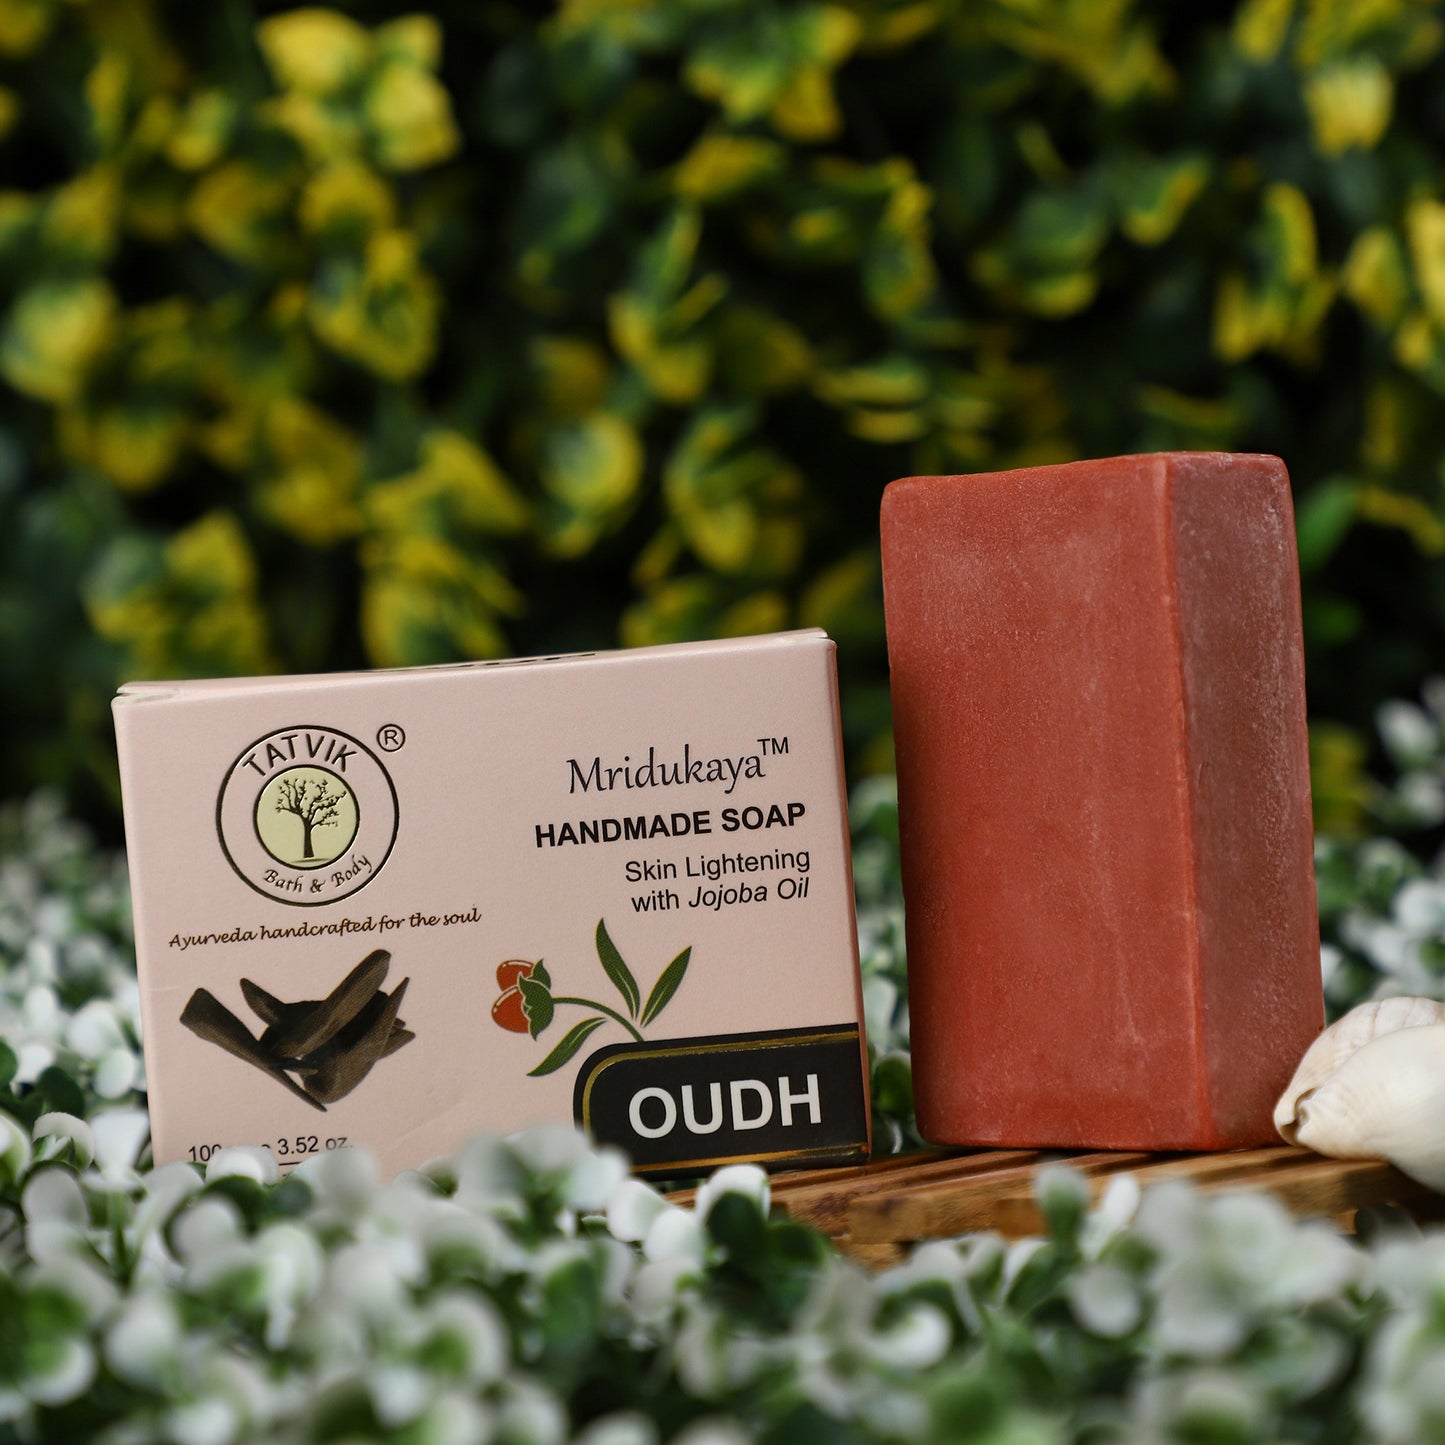 Mridukaya Oudh - Handmade Soap - 100 Gm